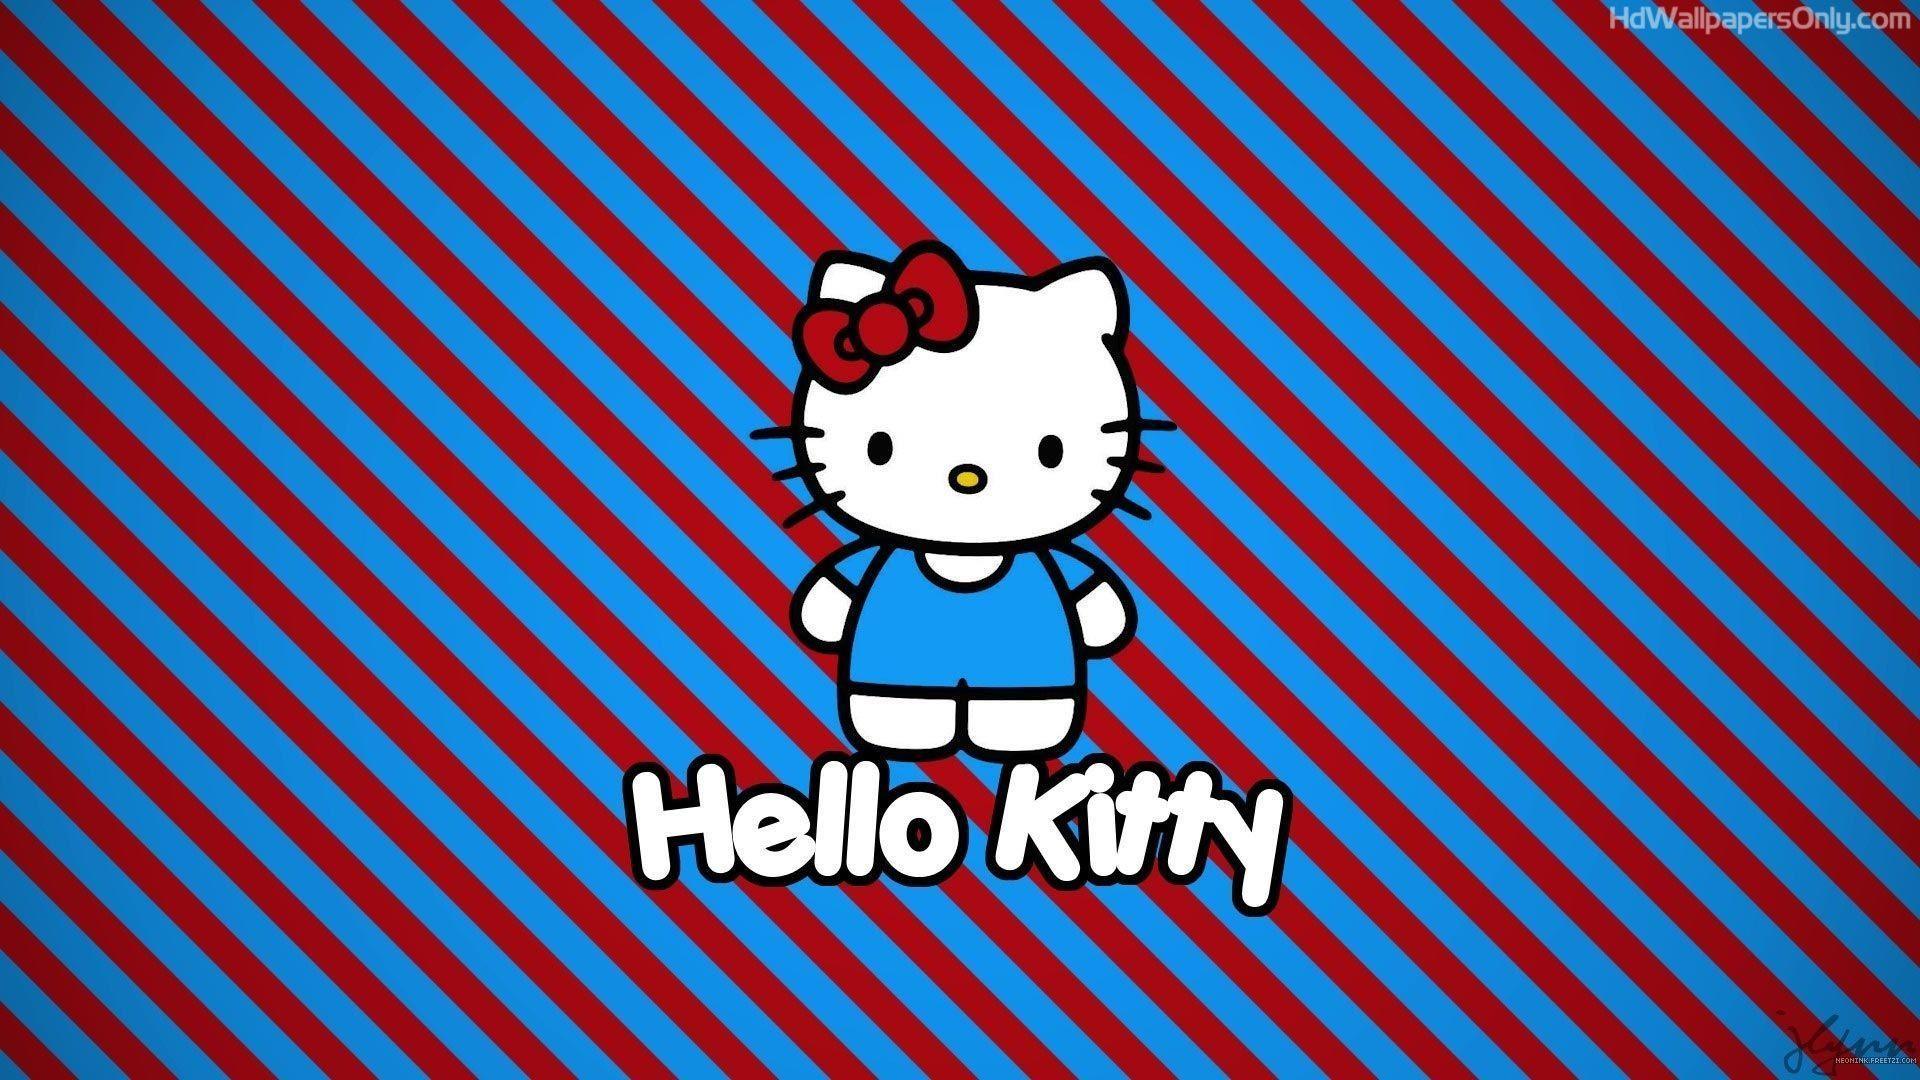 Hello Kitty Wallpaper HD WallpaperHD Wallpaper Only